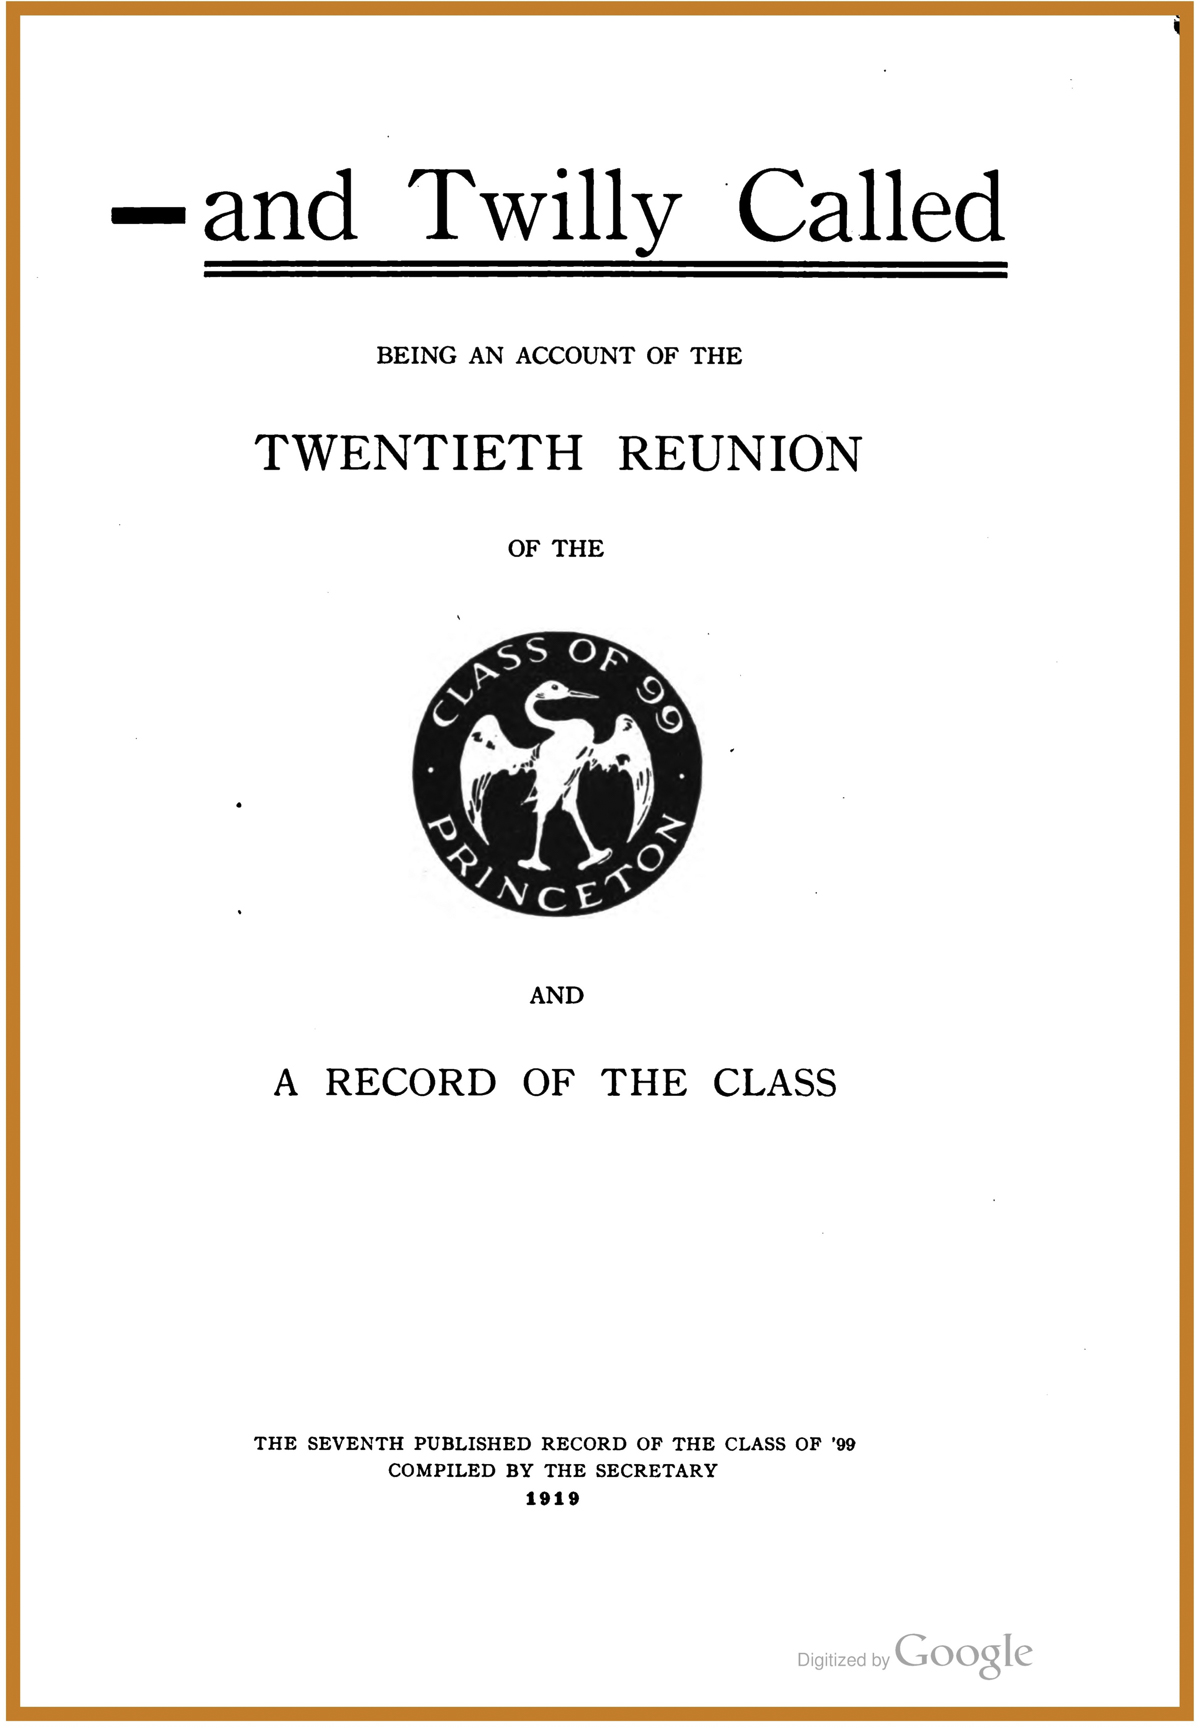 1899's Twentieth Reunion Book, in 1919